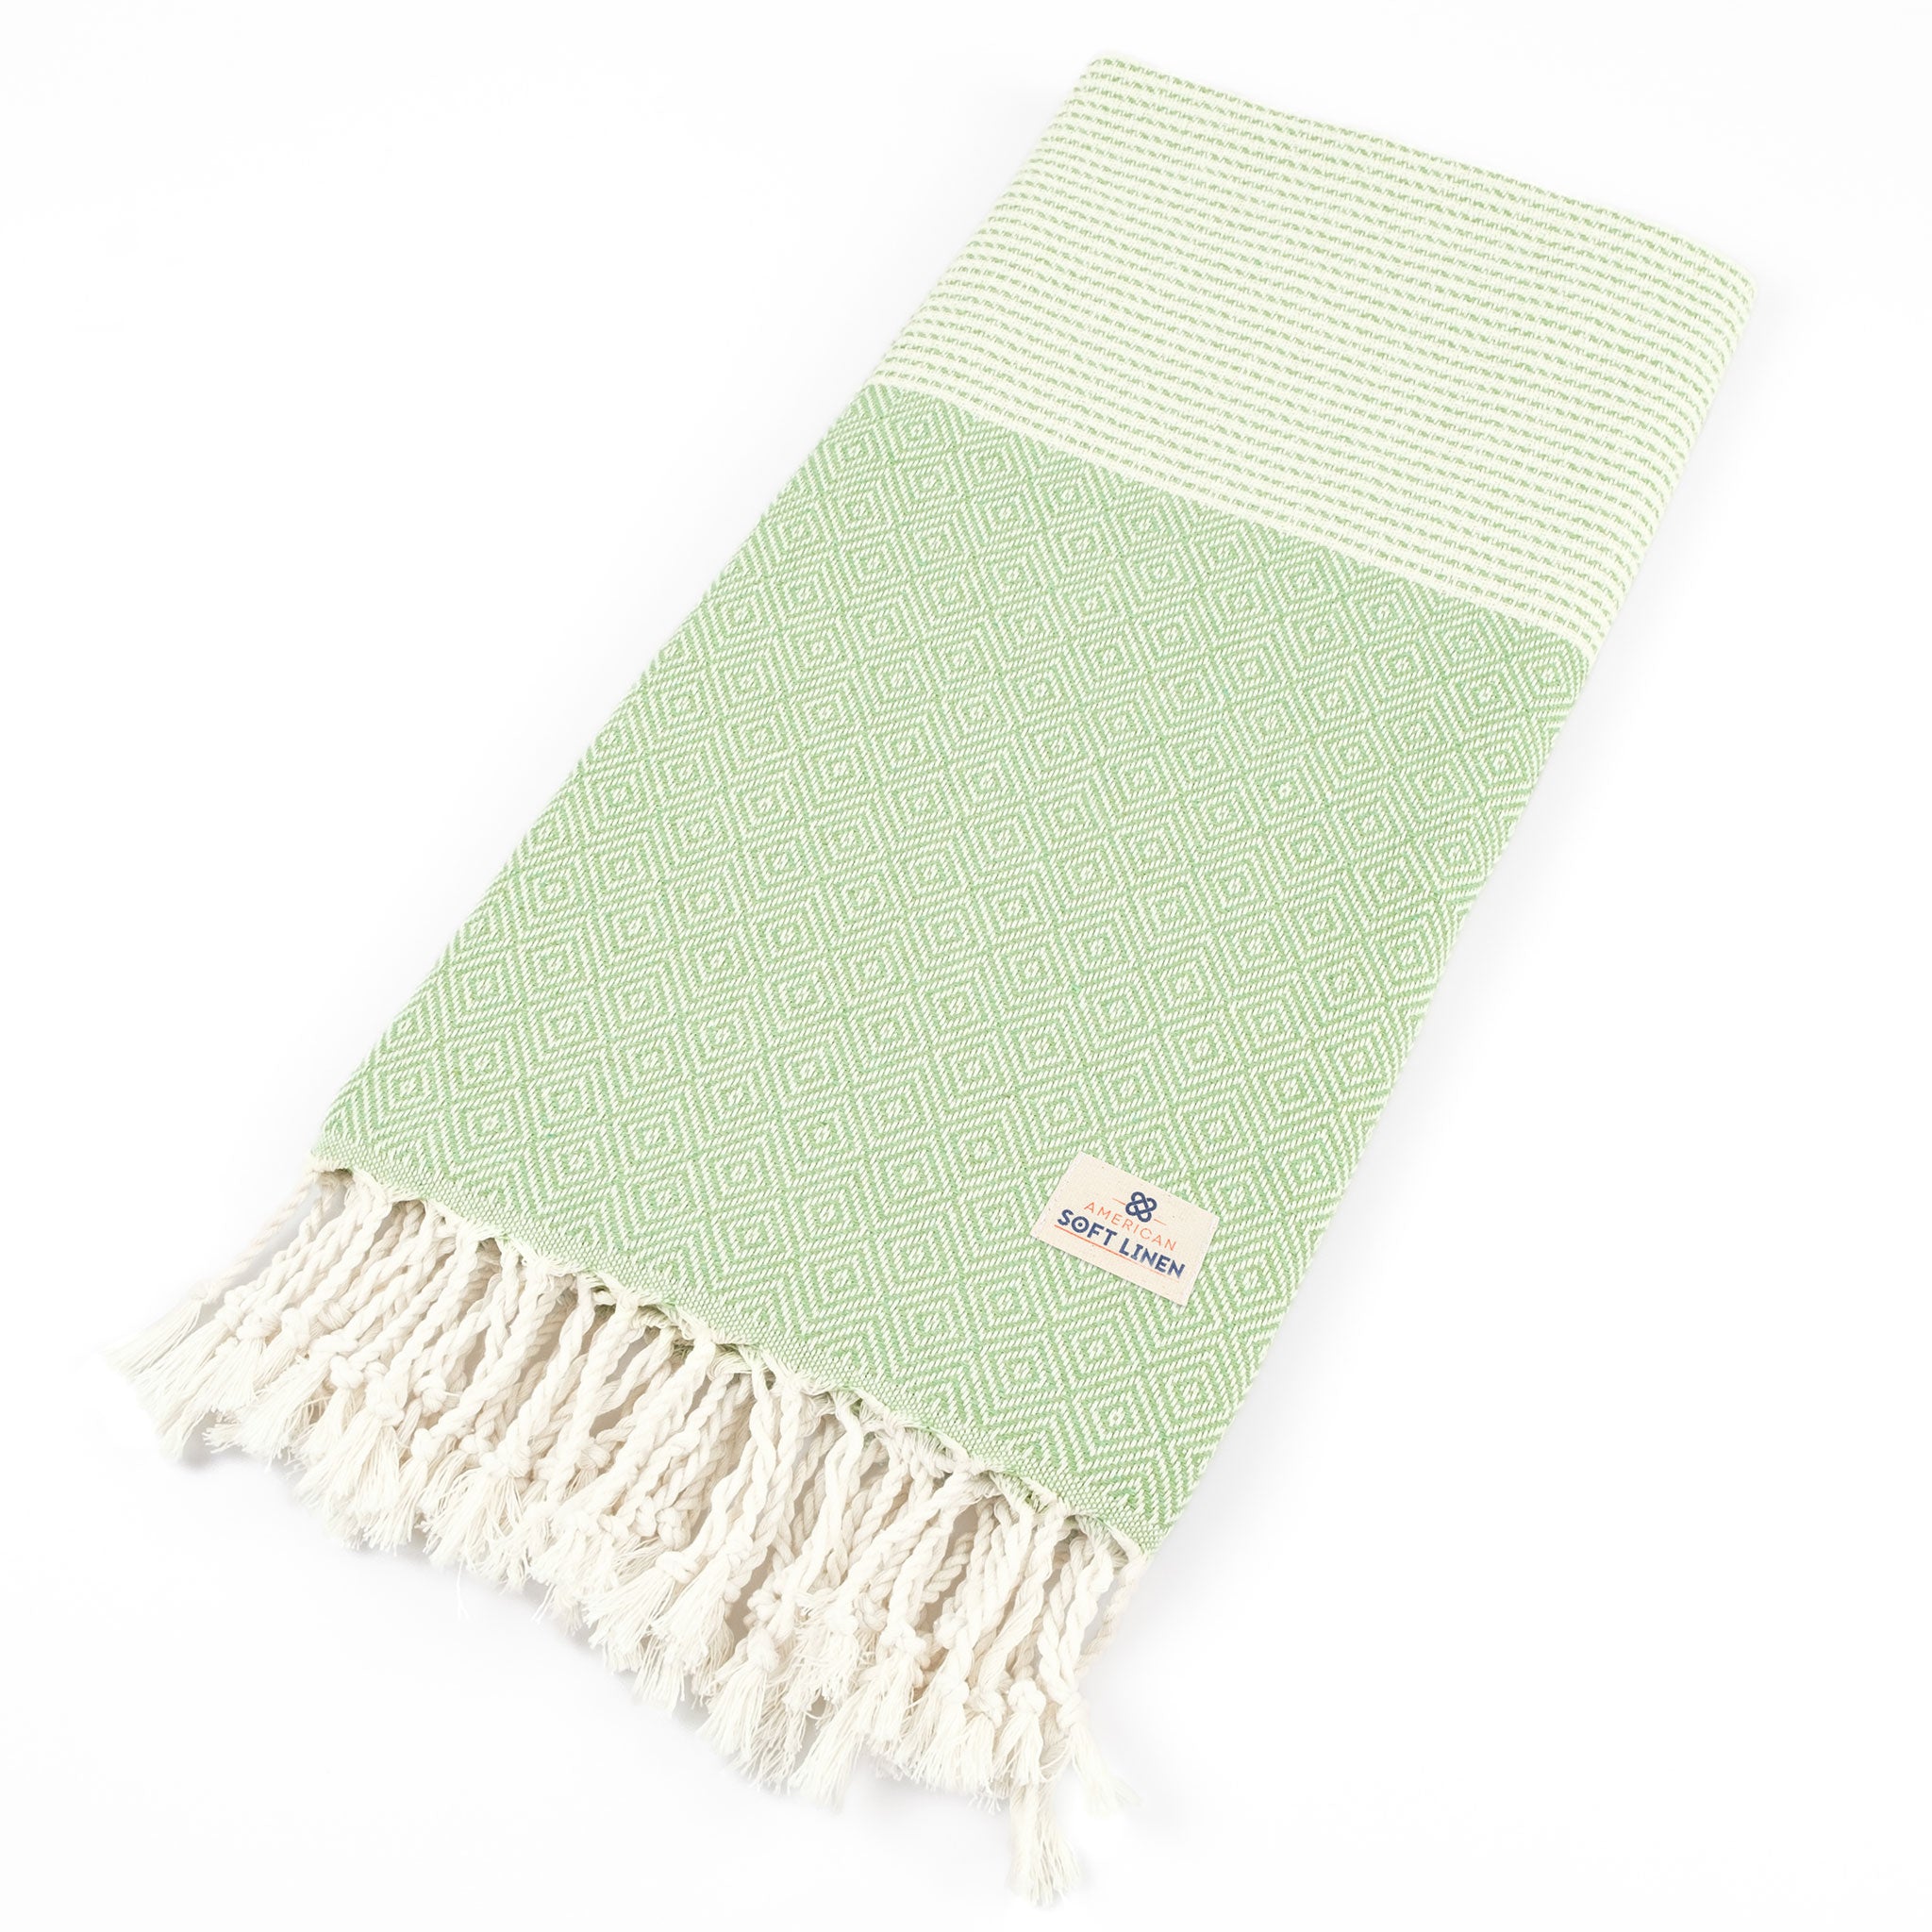 American Soft Linen - 100% Cotton Turkish Peshtemal Towels 40x70 Inches - Green - 5